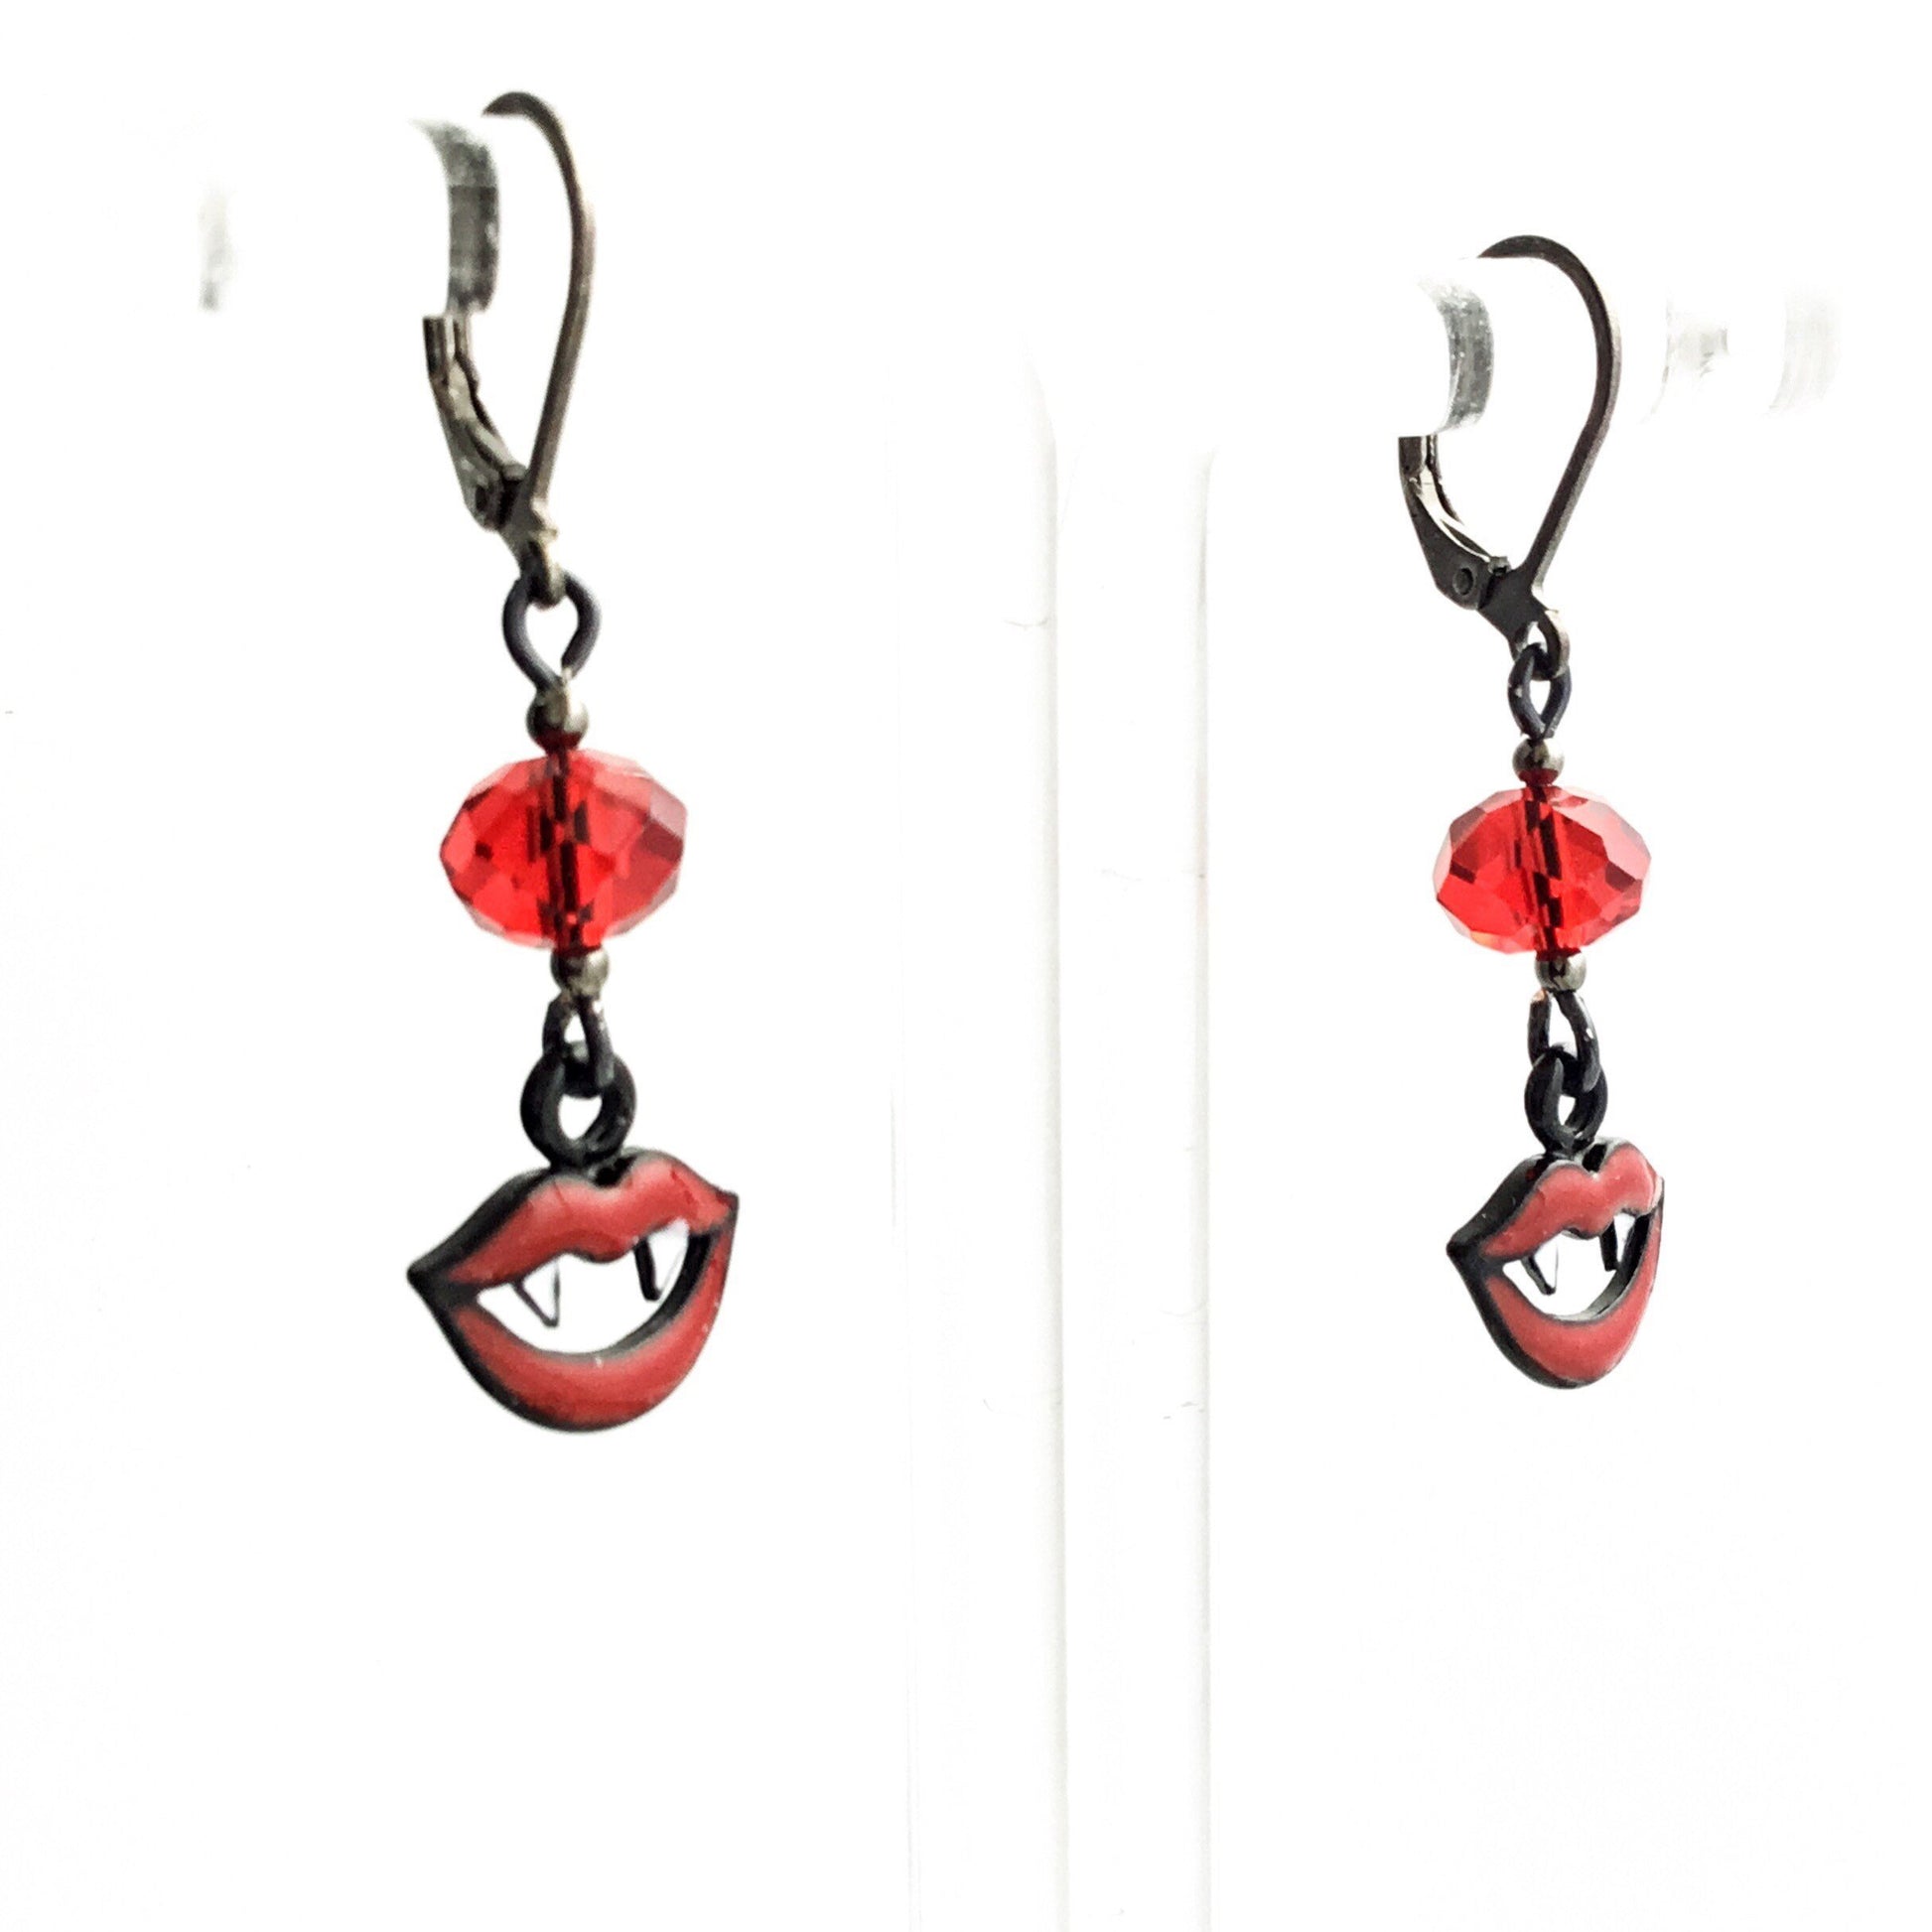 Love At First Bite Earrings. Vampire Lips & Fangs. Blood Red Glass Beads. Gunmetal. Halloween - Darkmoon Fayre